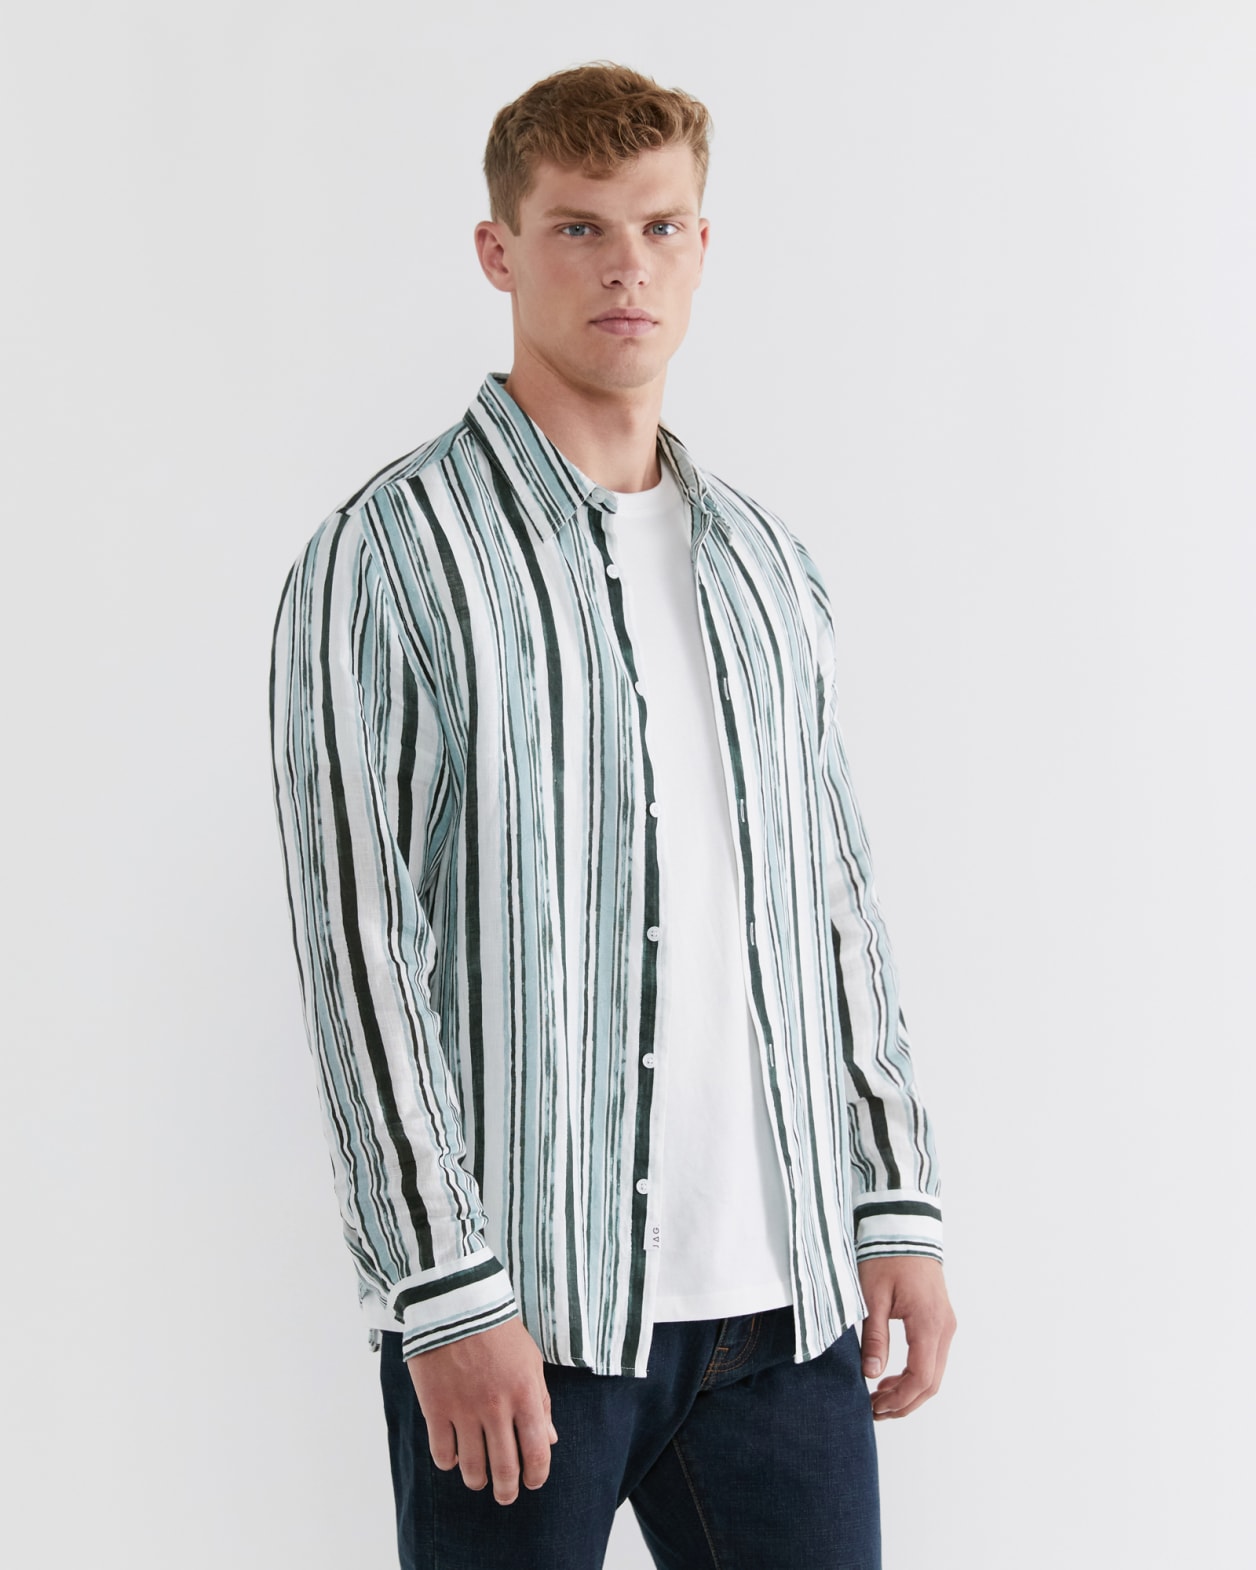 Hux Linen Rustic Stripe Shirt in MILITARY